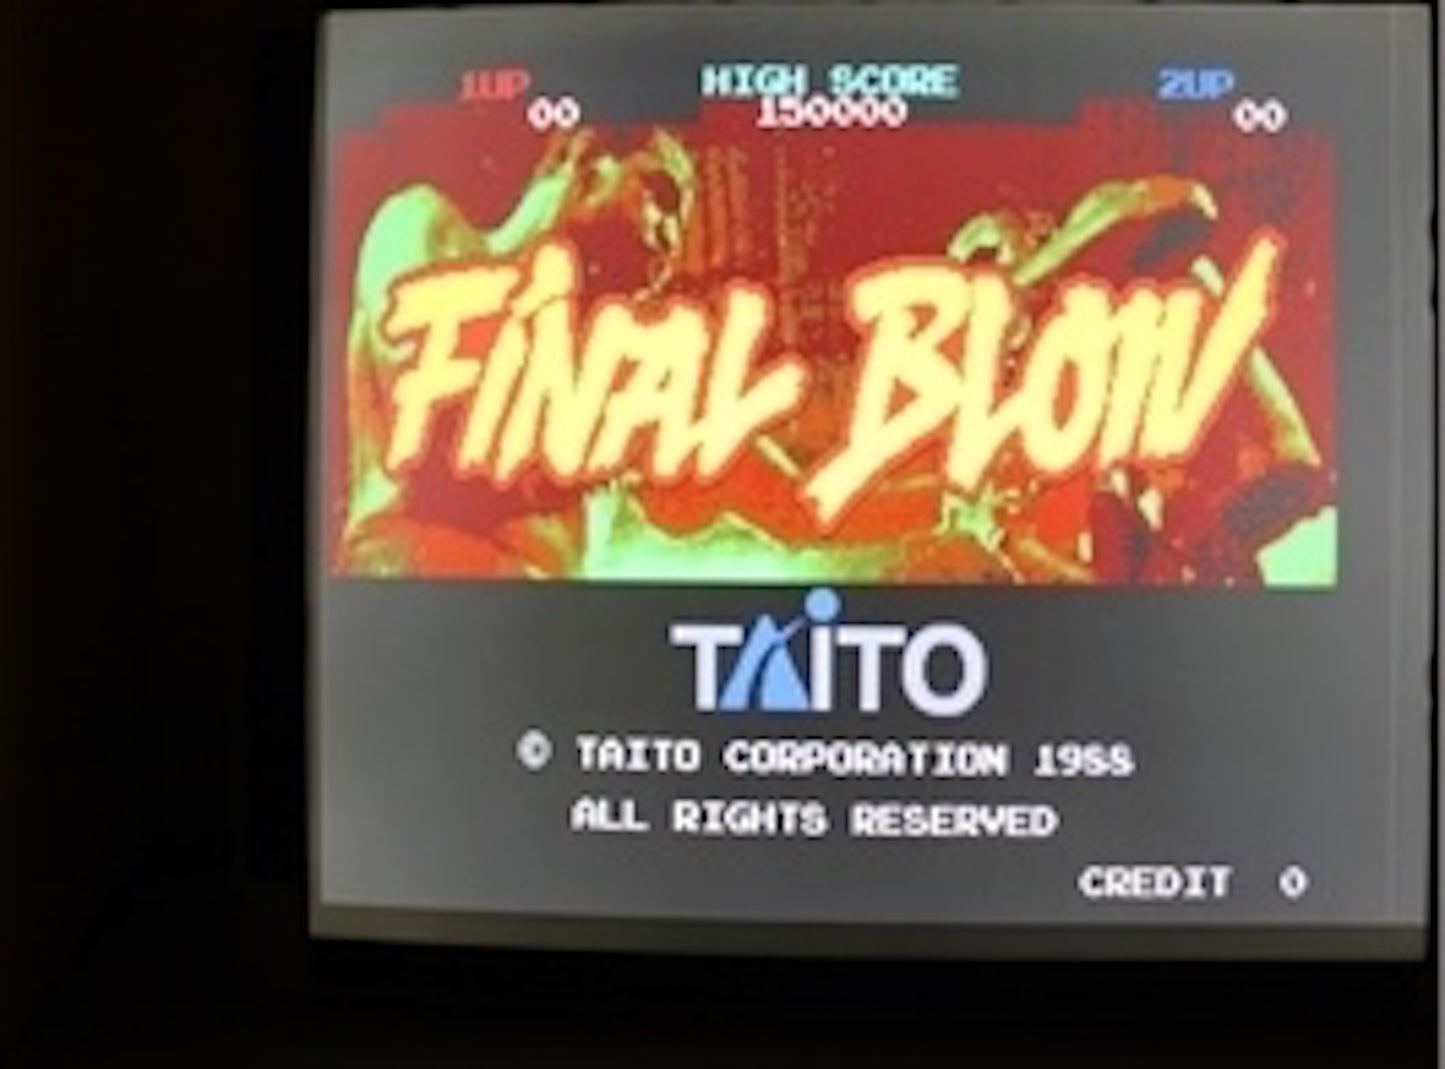 Final blow Taito F2 Arcade PCB System Cart, Manual, Instruction card set-e0630-